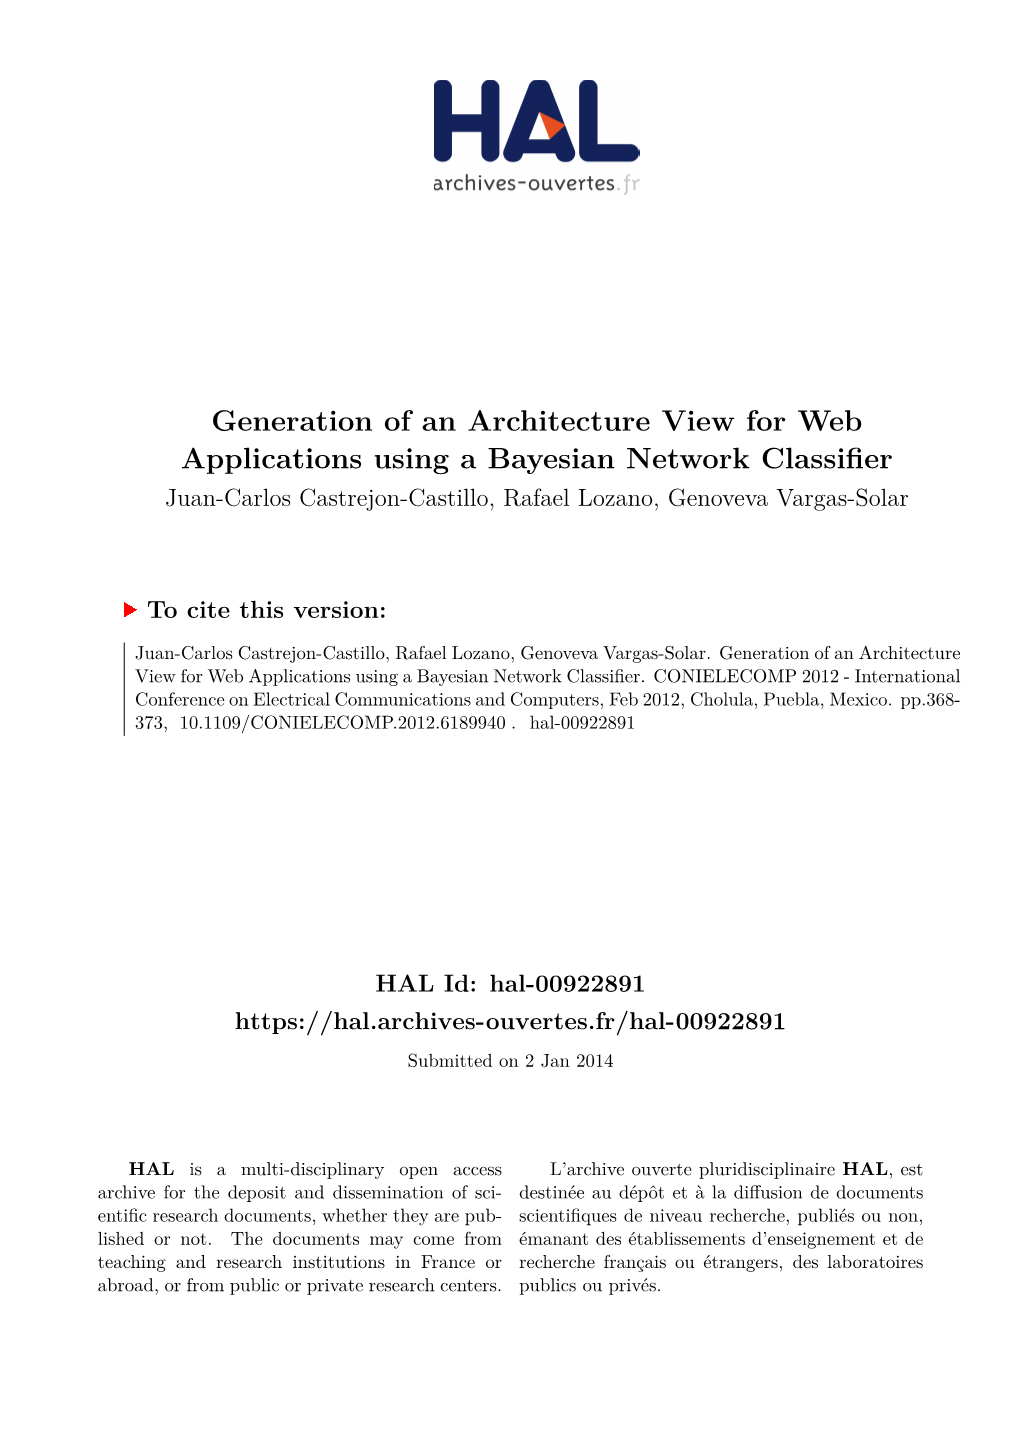 Generation of an Architecture View for Web Applications Using a Bayesian Network Classifier Juan-Carlos Castrejon-Castillo, Rafael Lozano, Genoveva Vargas-Solar